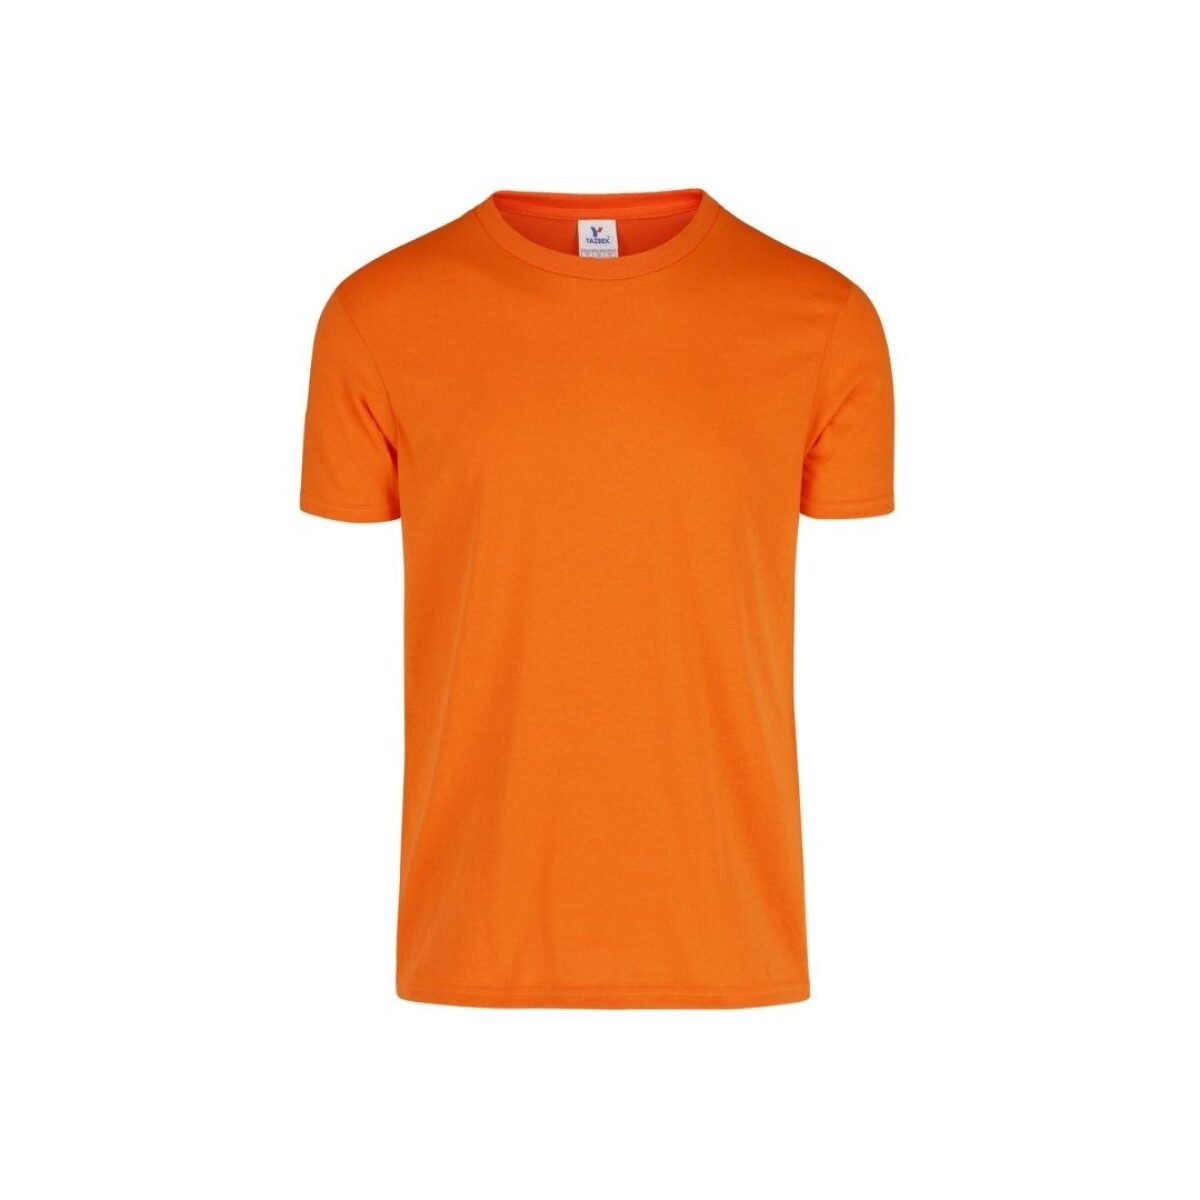 Camiseta a la base jaspe - Naranja neón 